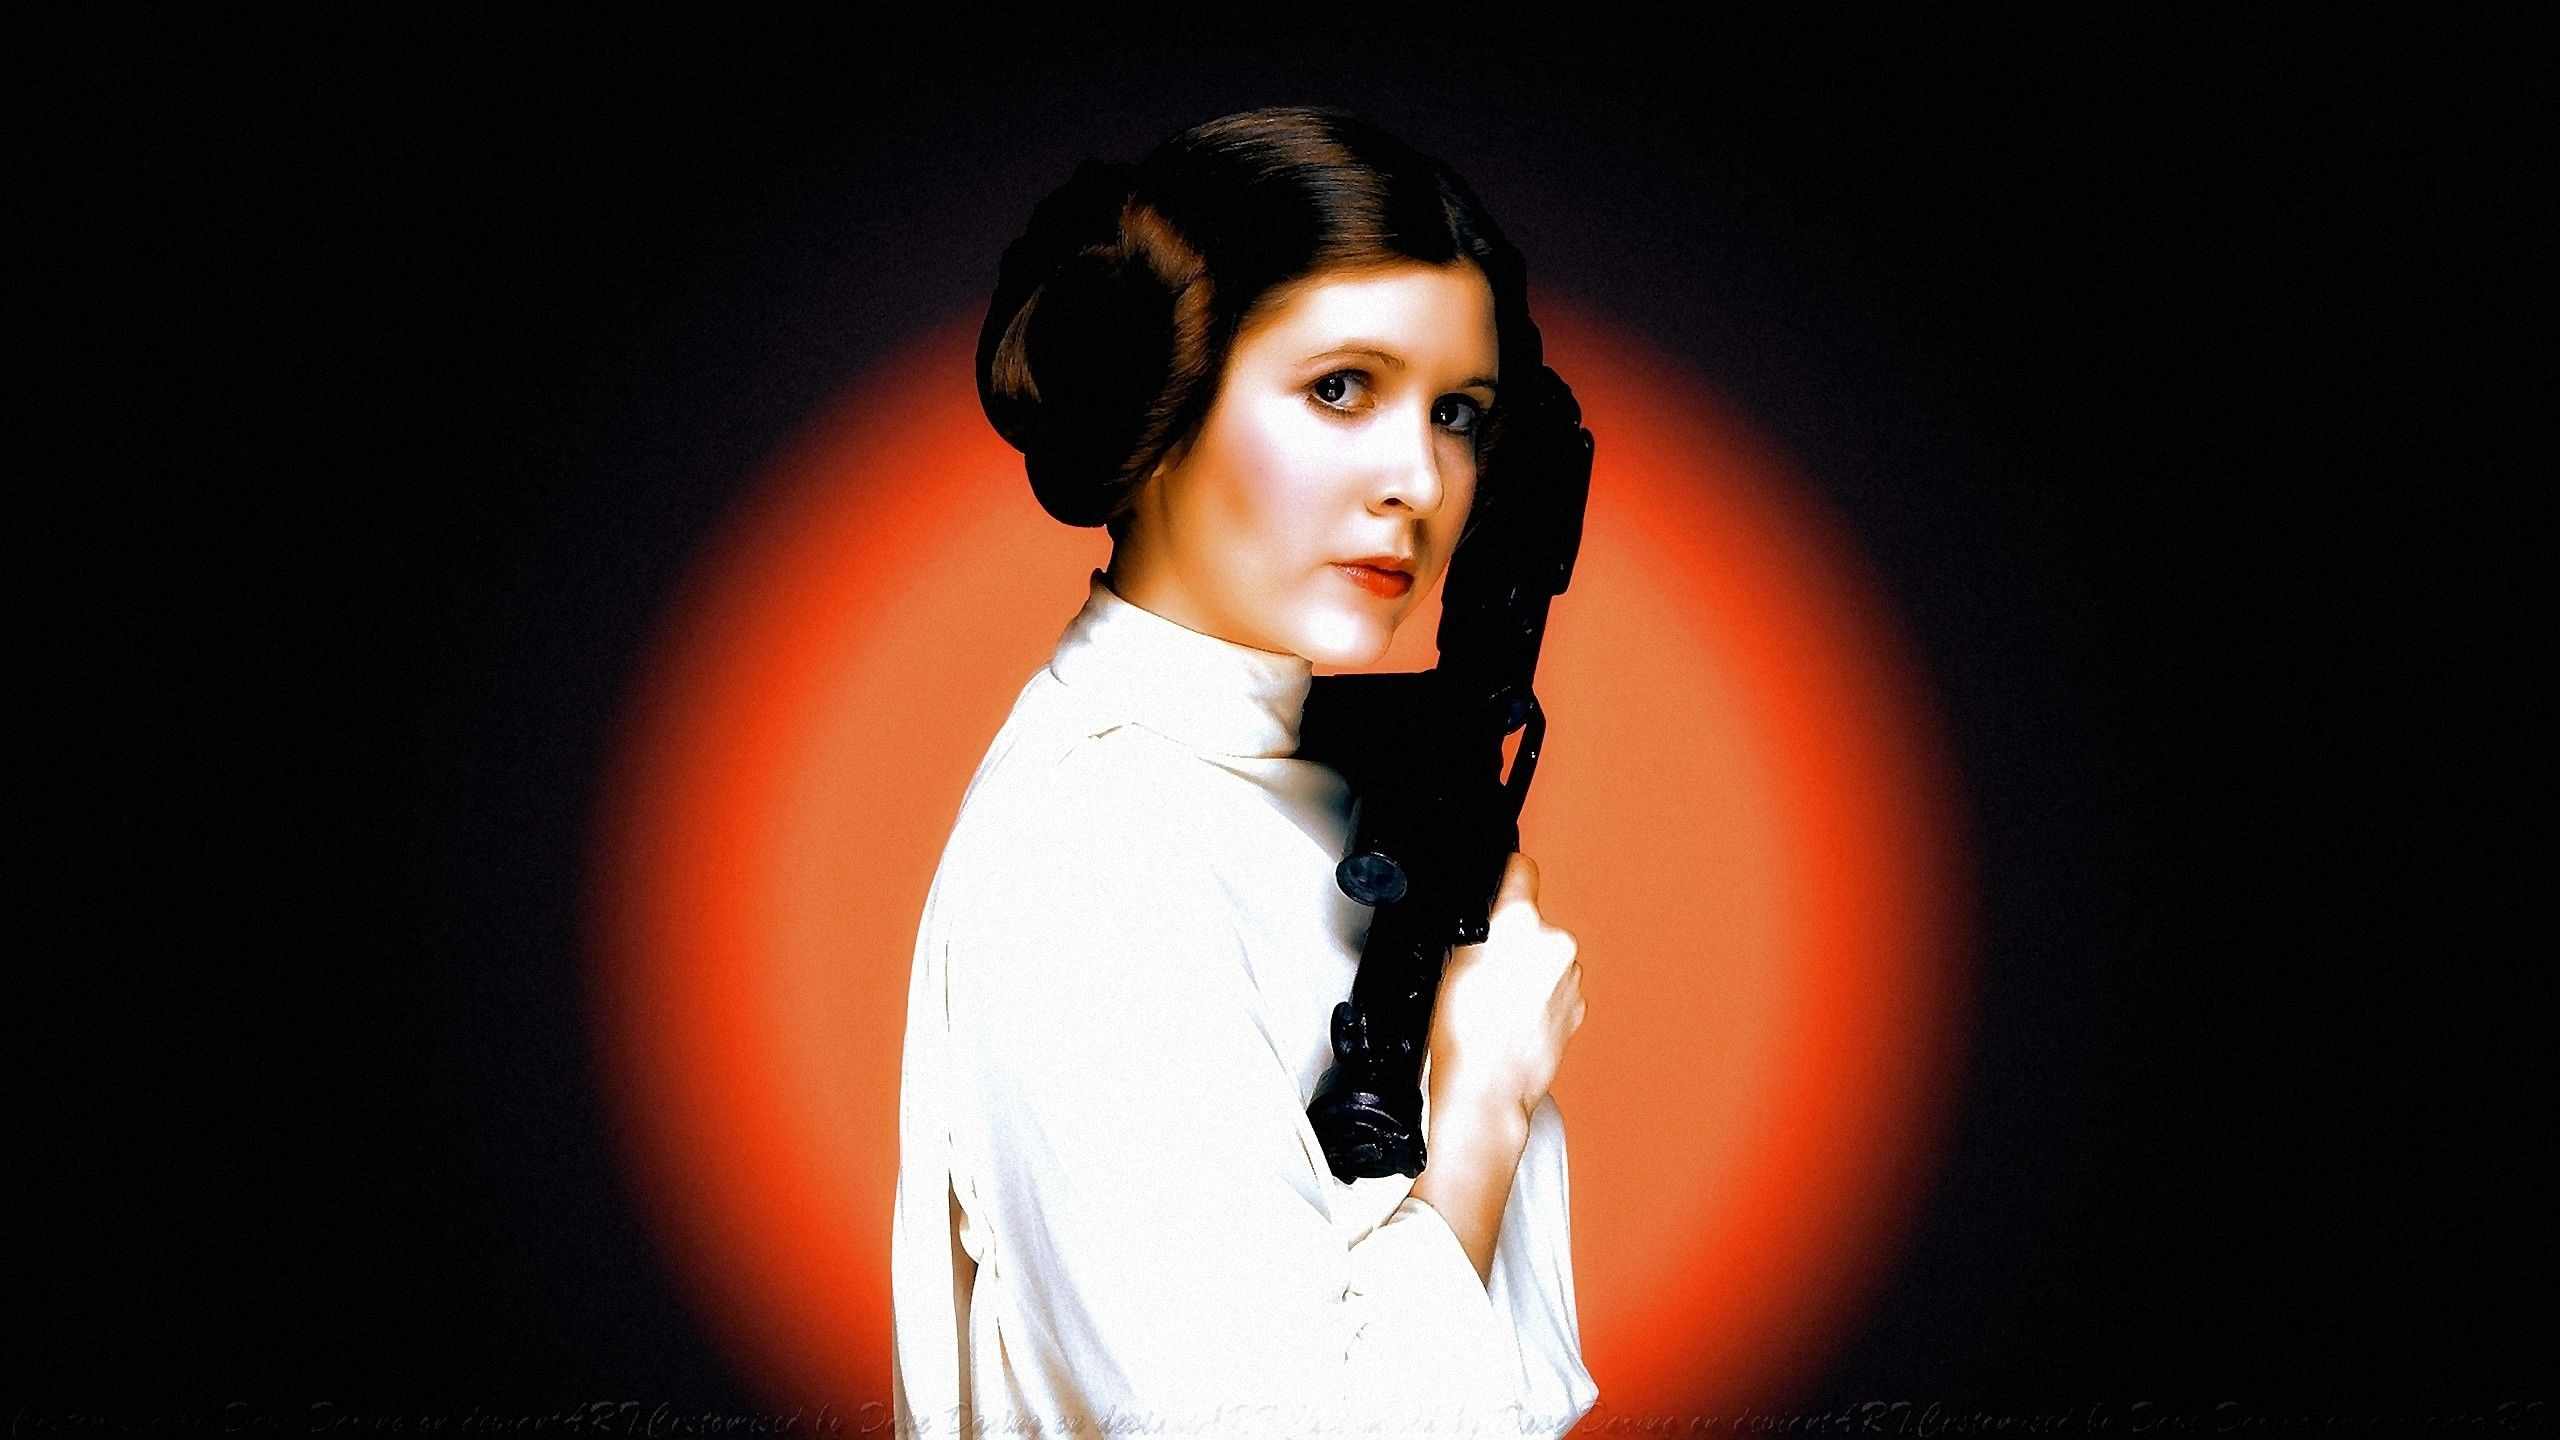 2560x1440 Princess Leia Wallpapers Top Free Princess Leia Backgrounds